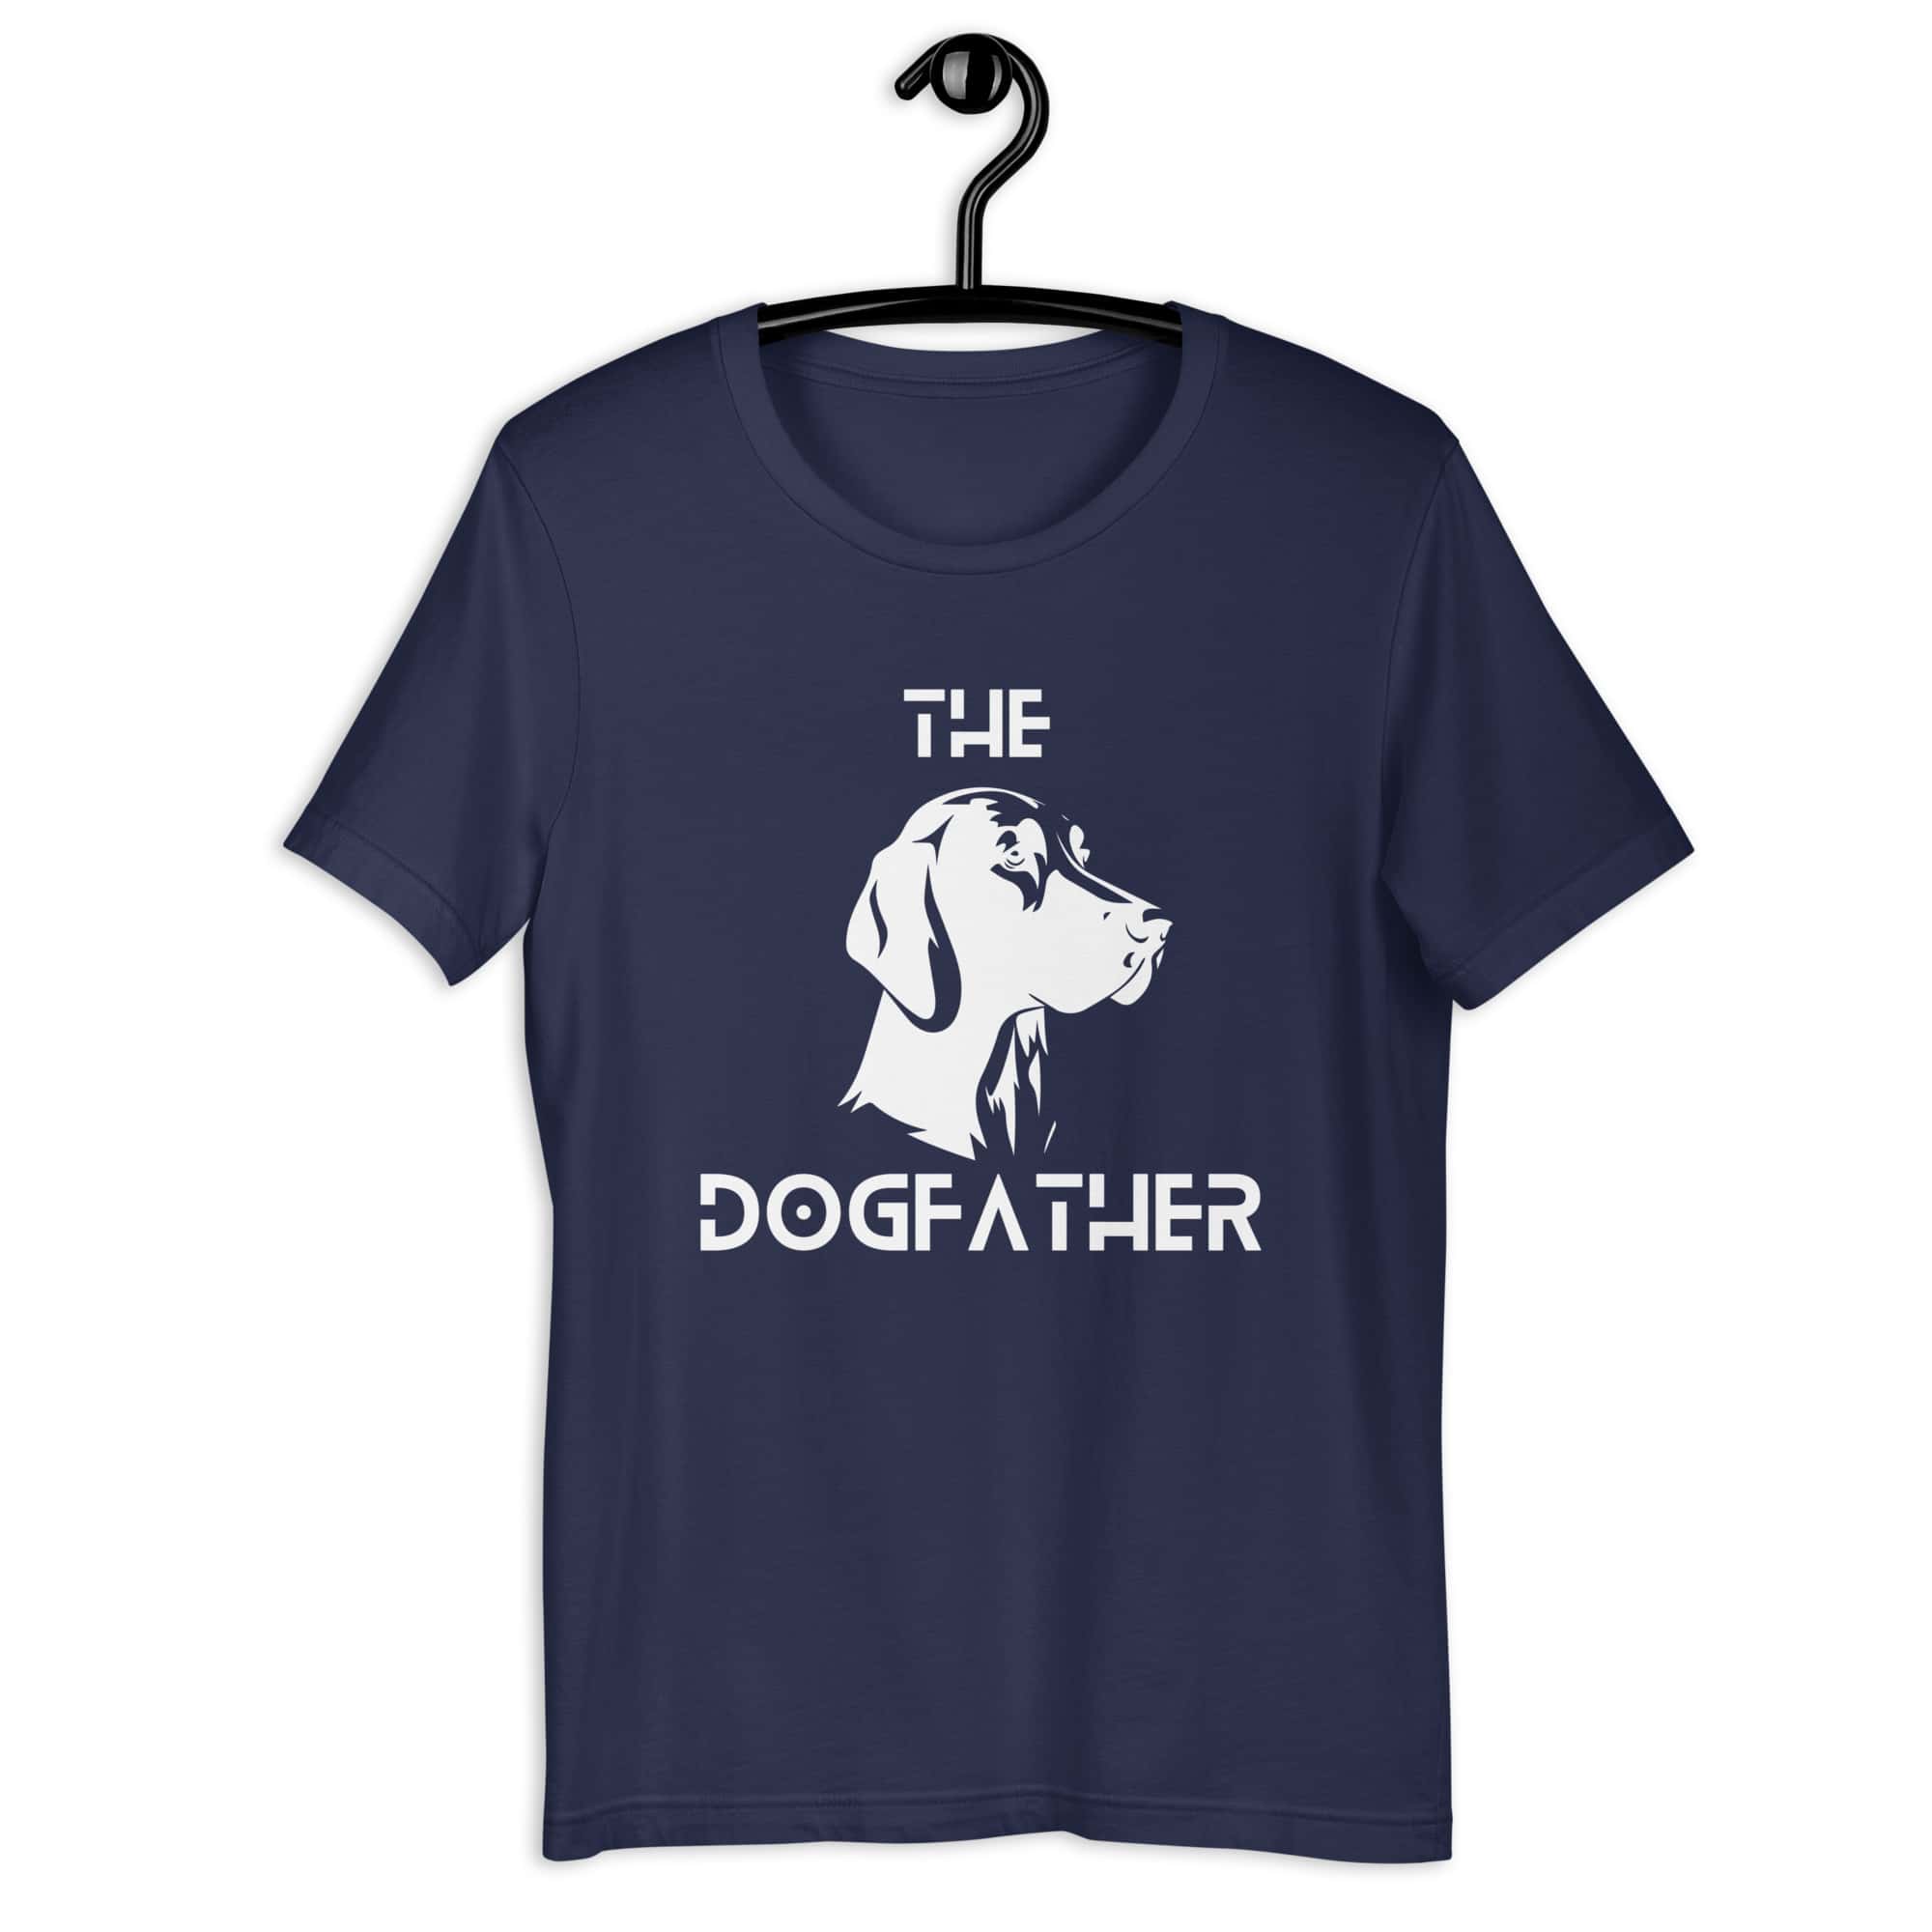 The Dogfather Retrievers Unisex T-Shirt. Navy